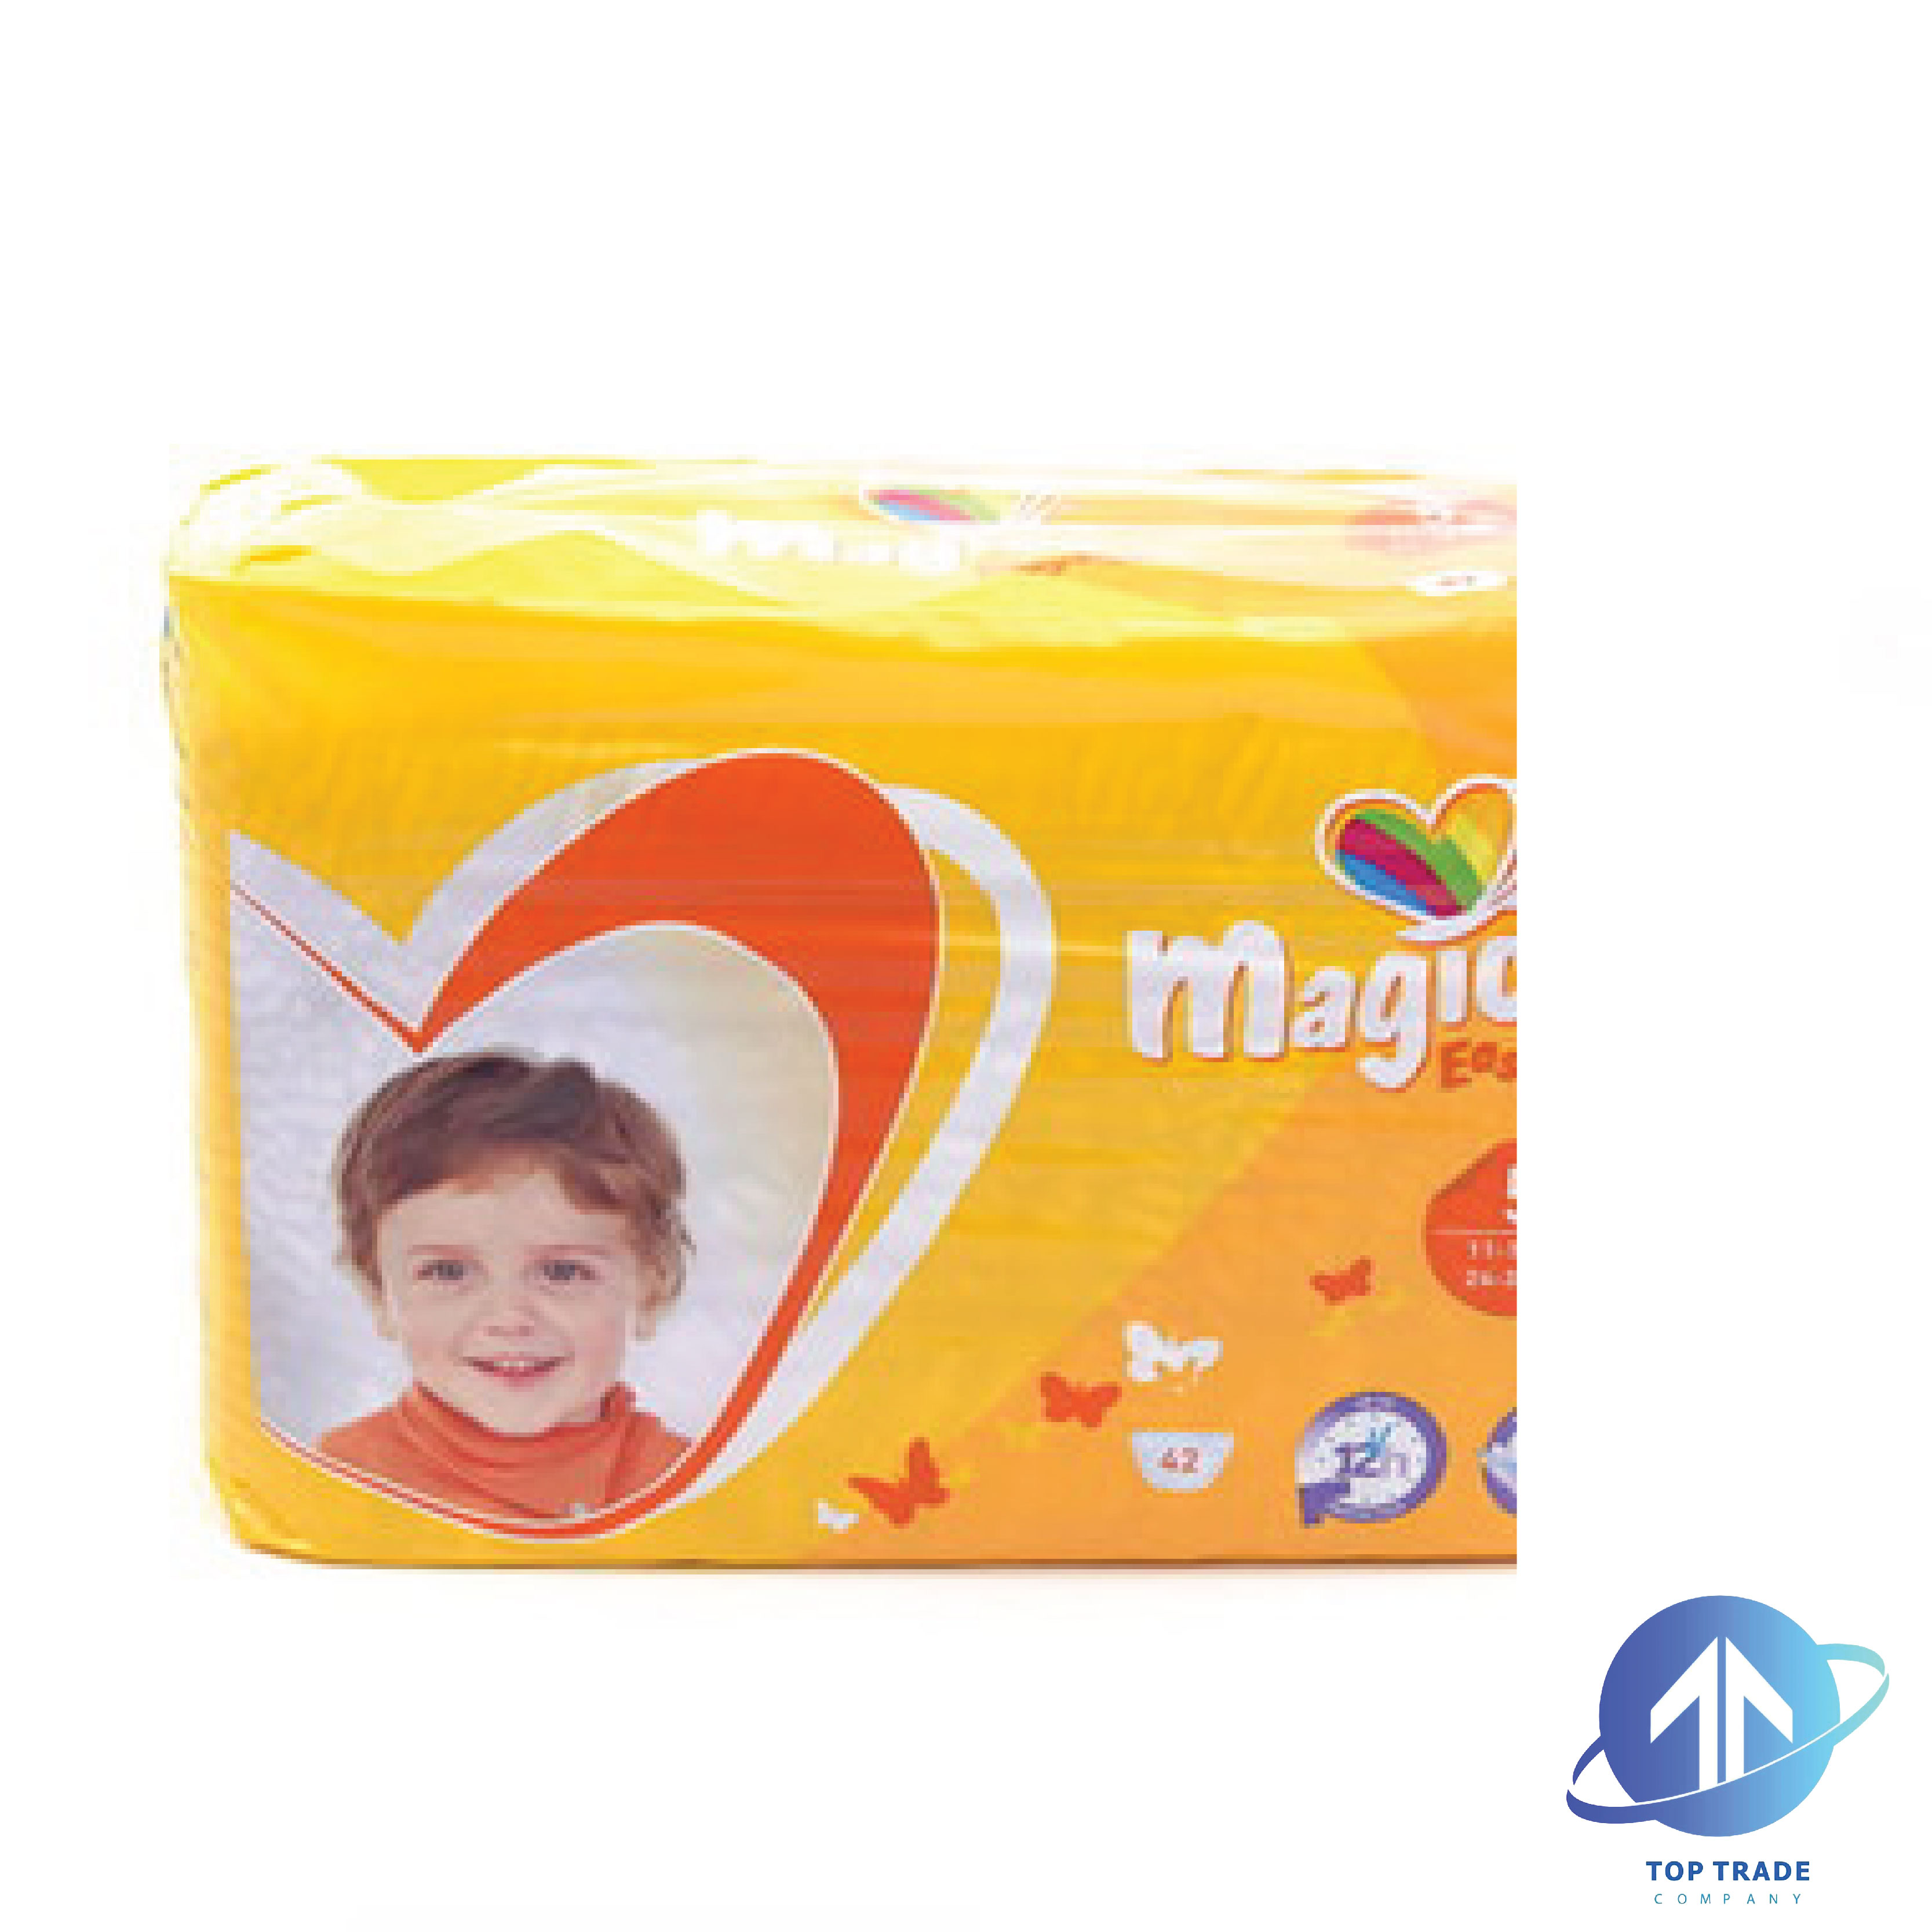 Magics Easysoft Baby diapers 42pcs size 5: 11-16KG